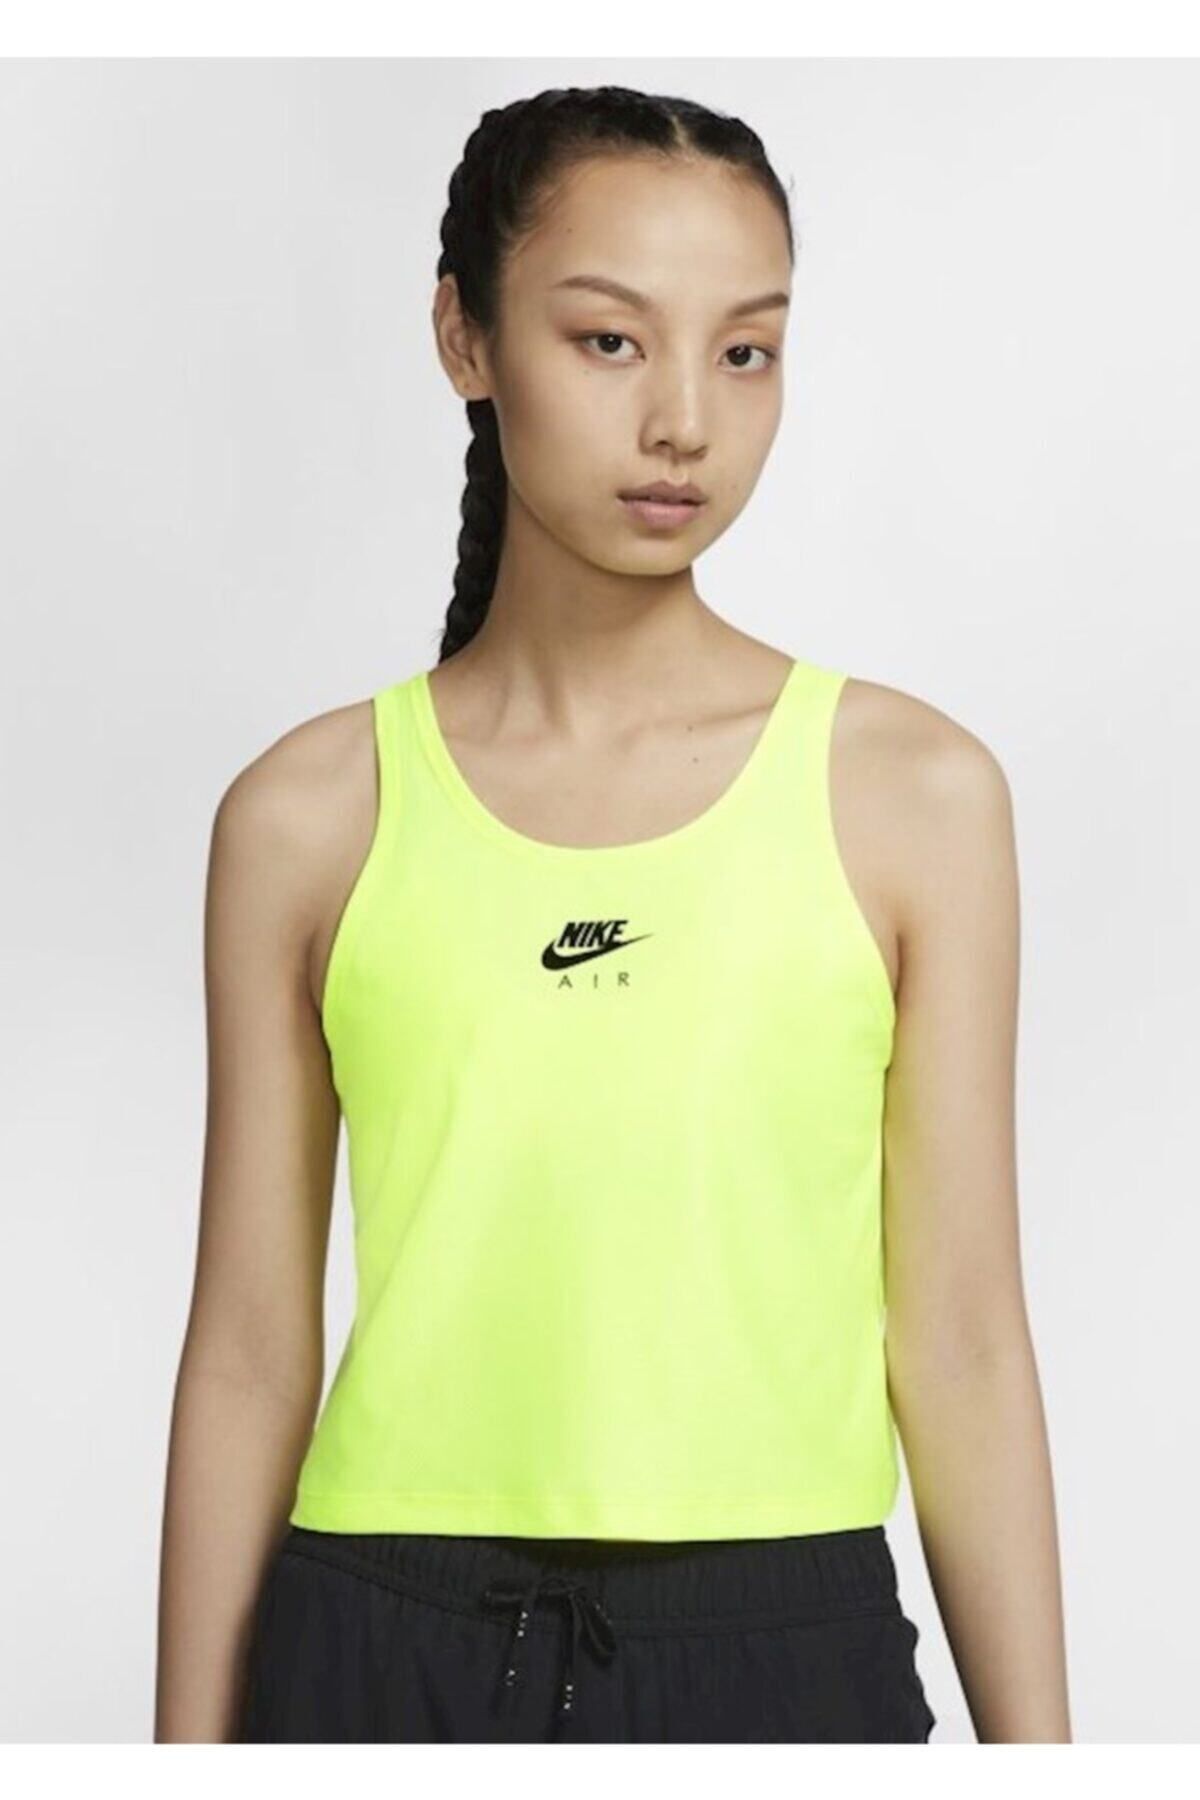 Nike Air Women's Running Tank